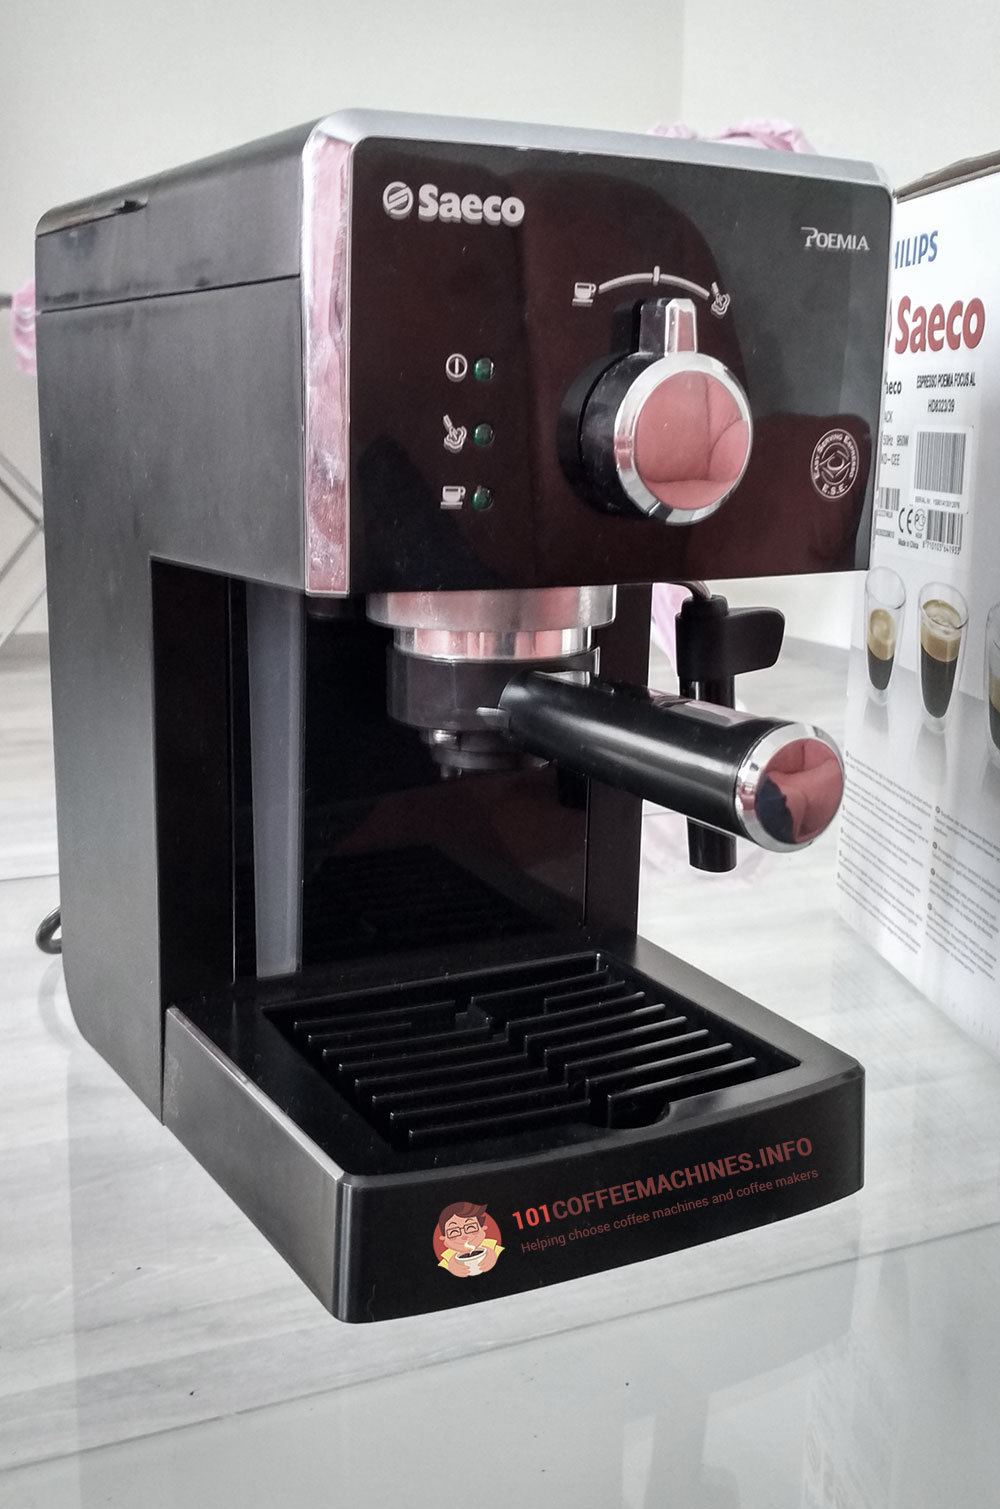 Saeco Poemia Espresso Makers: Full Review with Disassembly and Comparison  with new Gaggia Viva RI8437, RI8435, RI8433